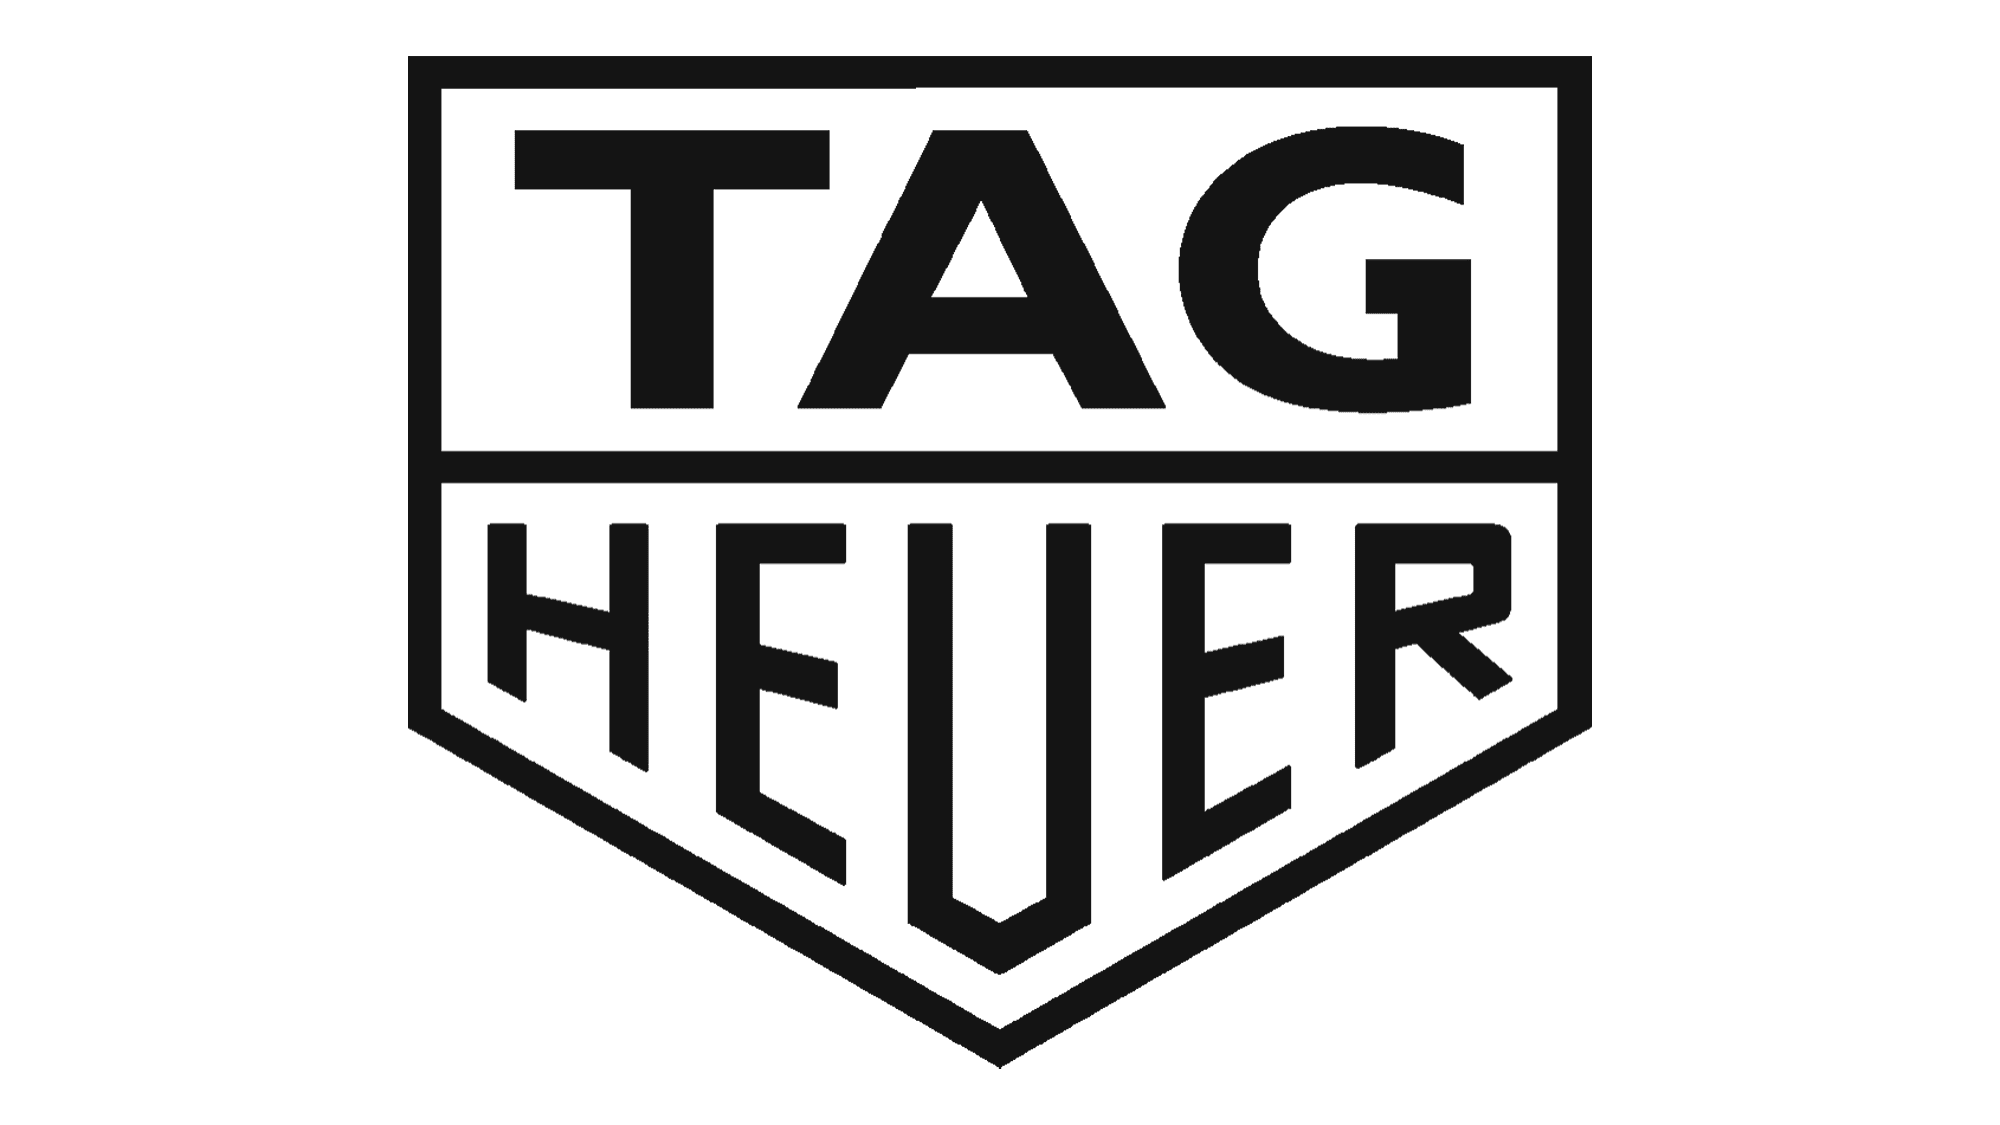 Tag Heuer Logo - LogoDix